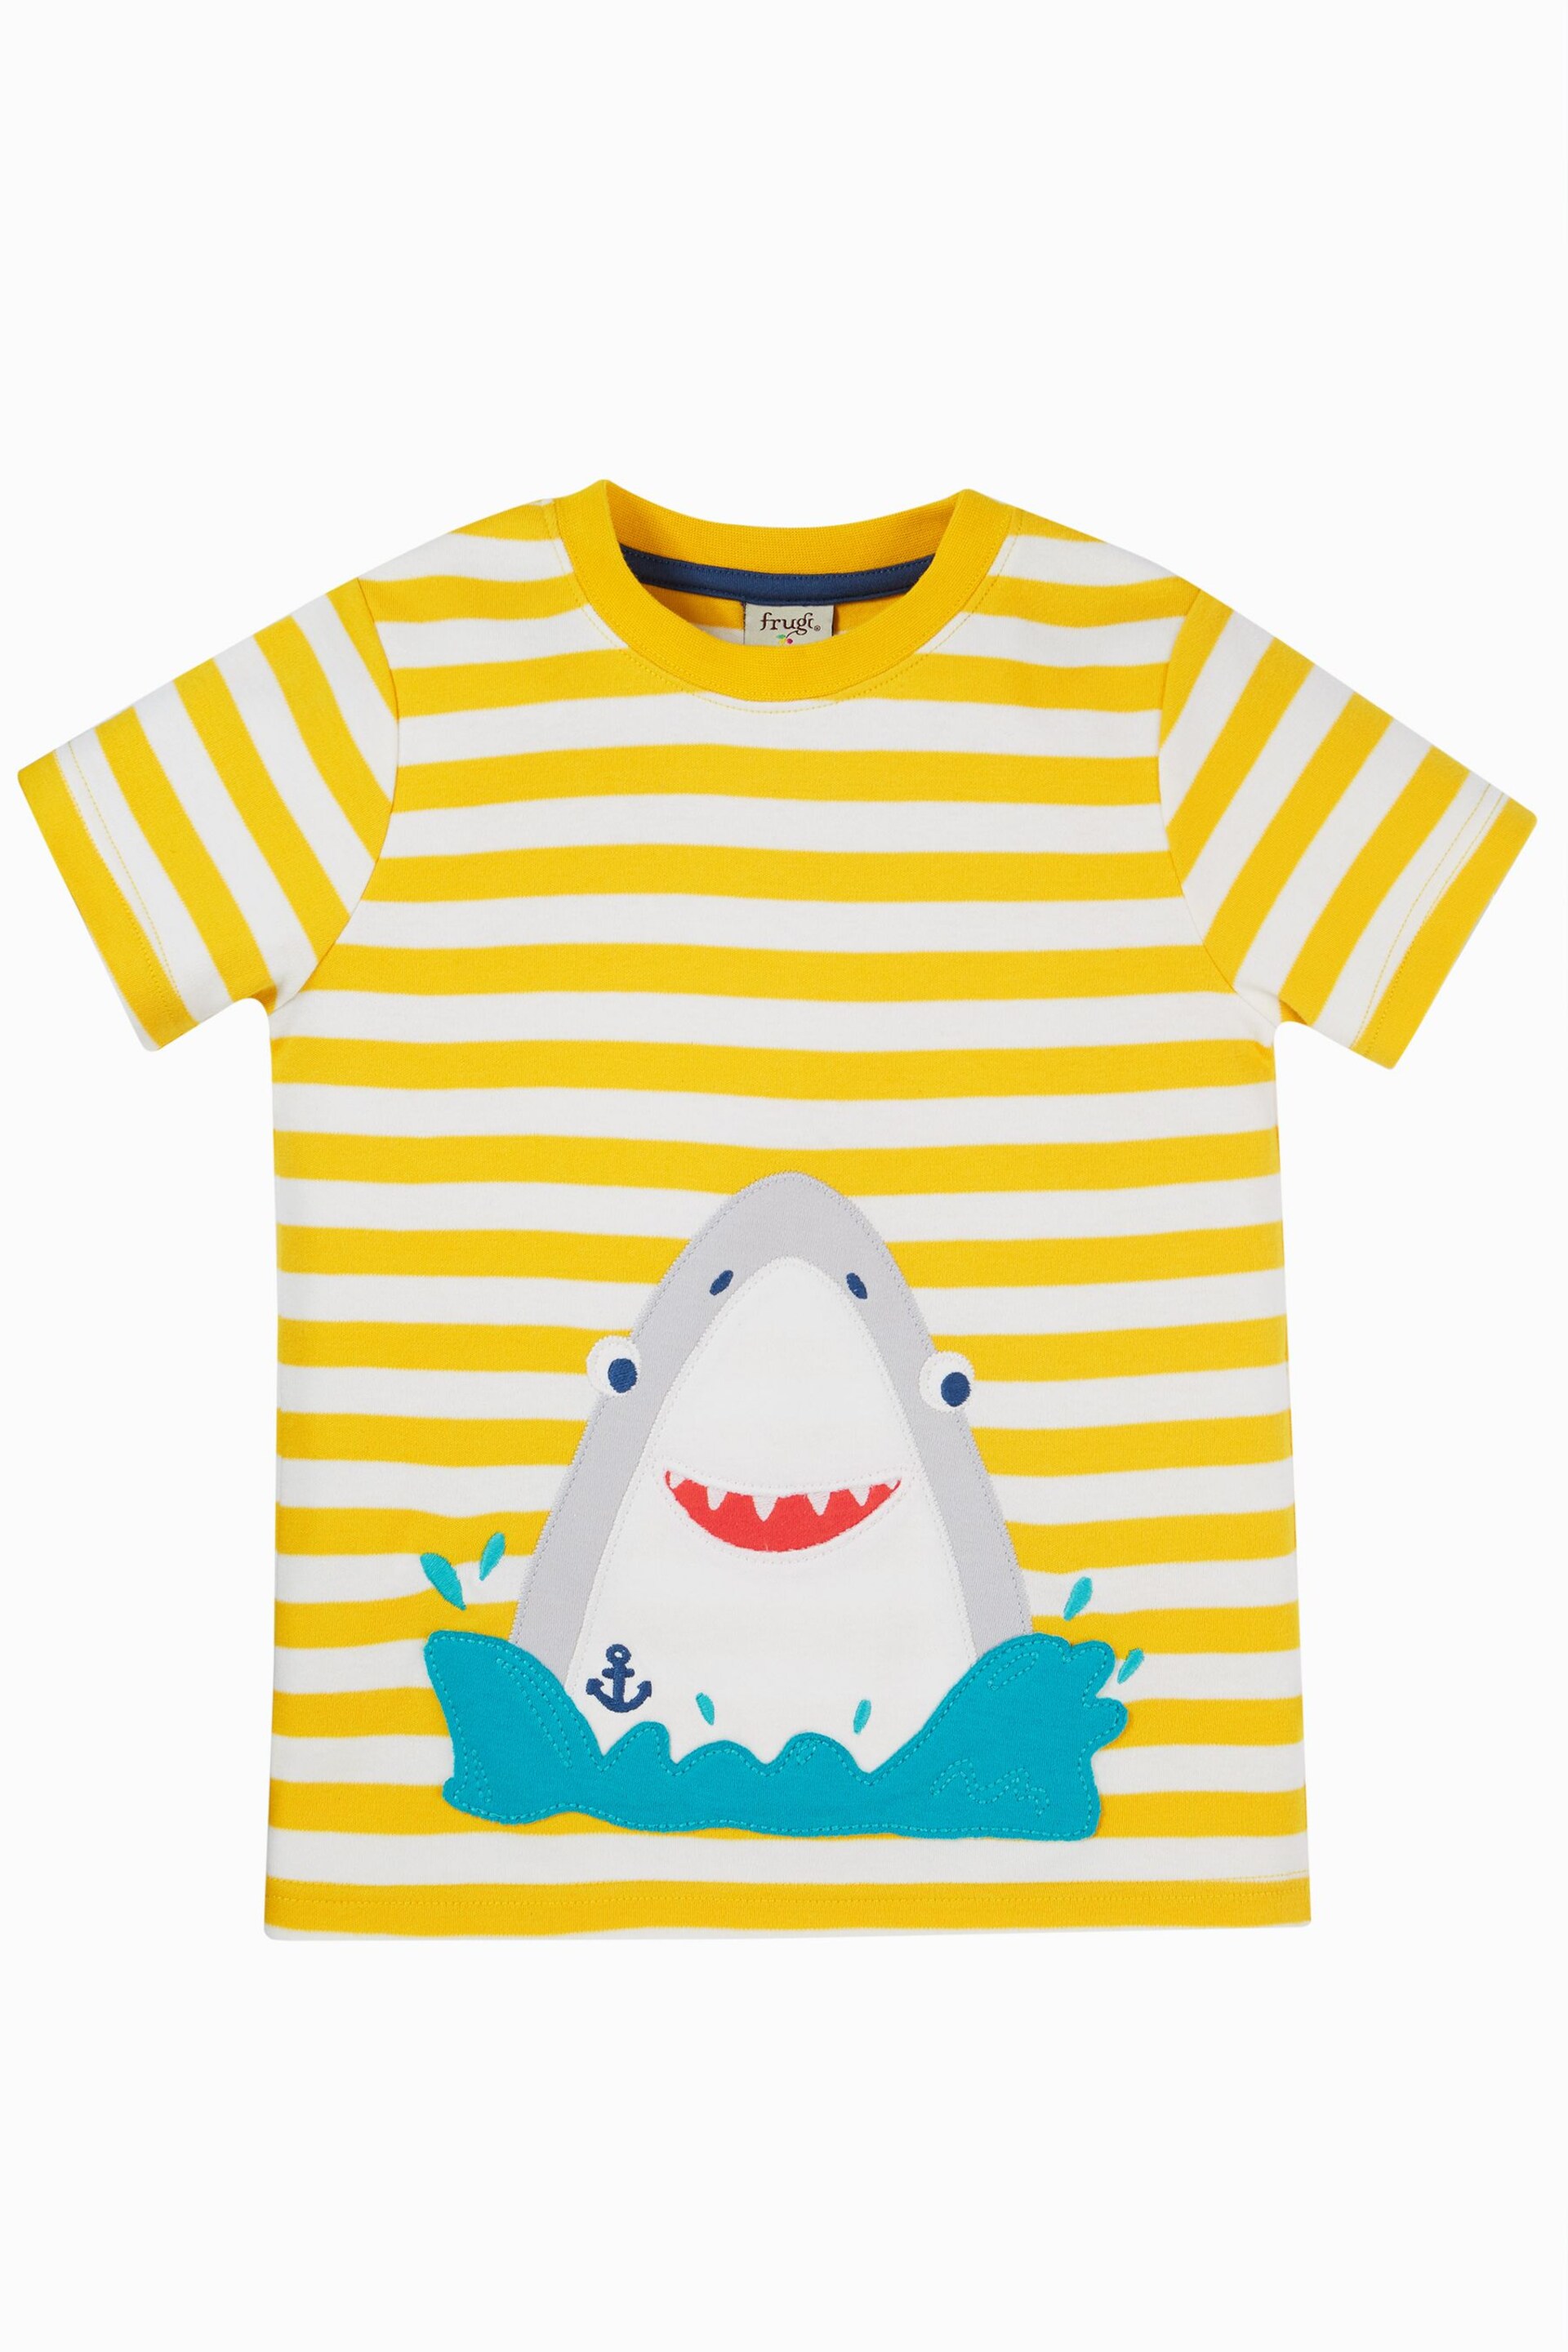 Frugi Yellow Shark Applique T-Shirt - Image 2 of 3